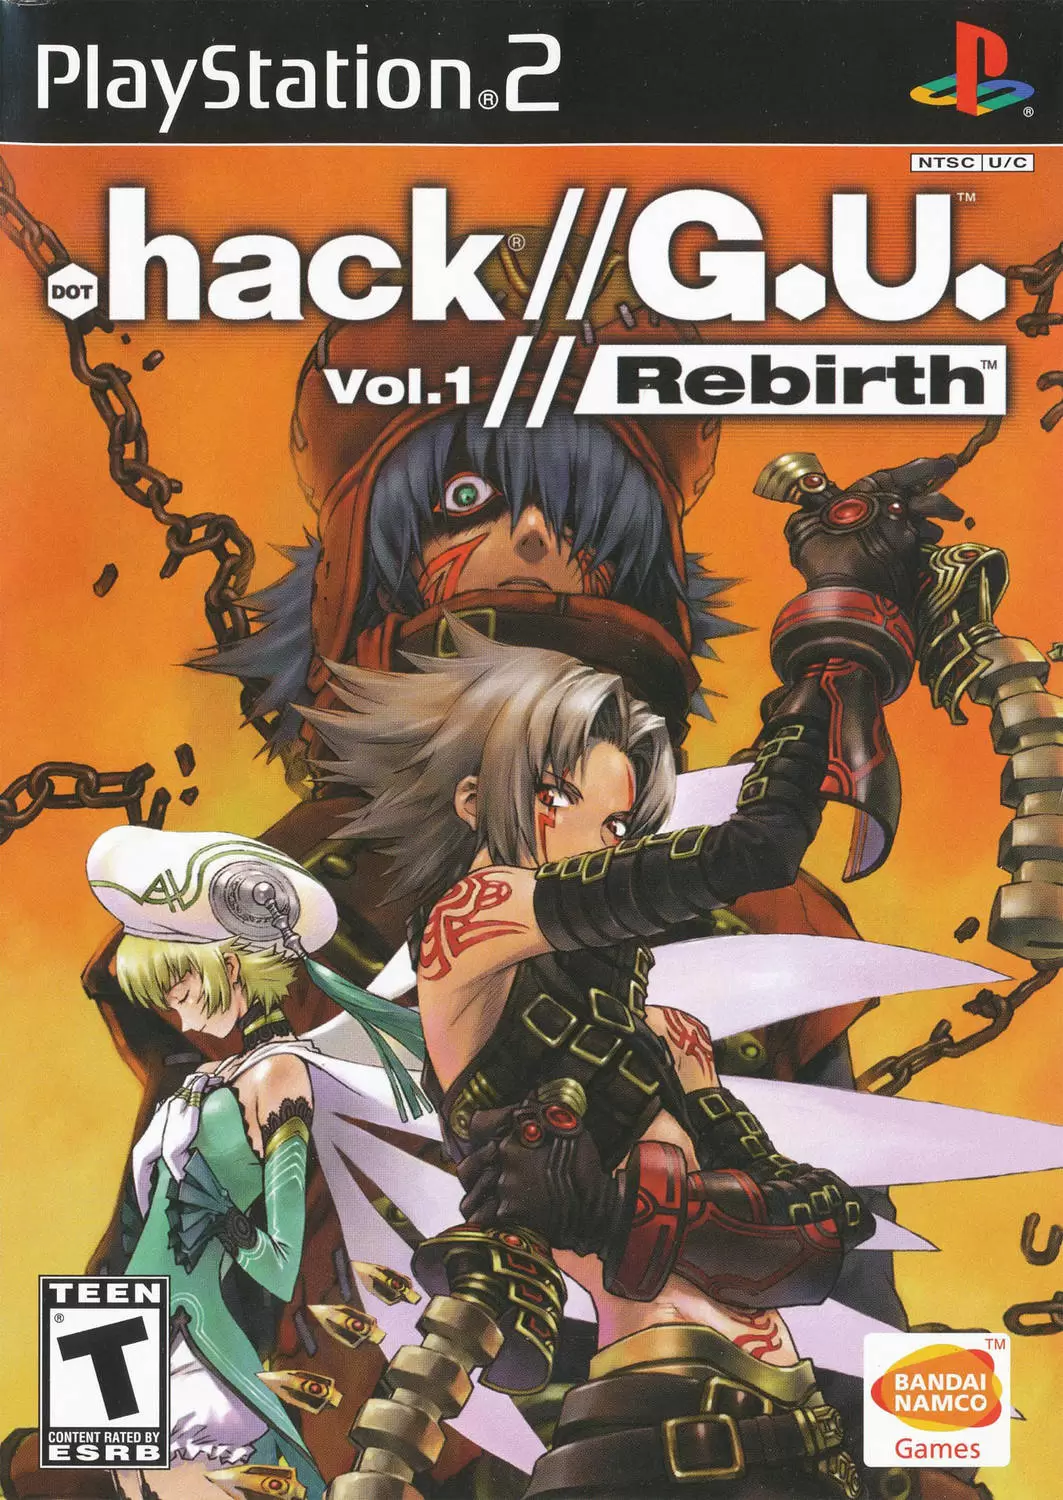 PS2 Games - .hack//G.U. Vol. 1 - Rebirth